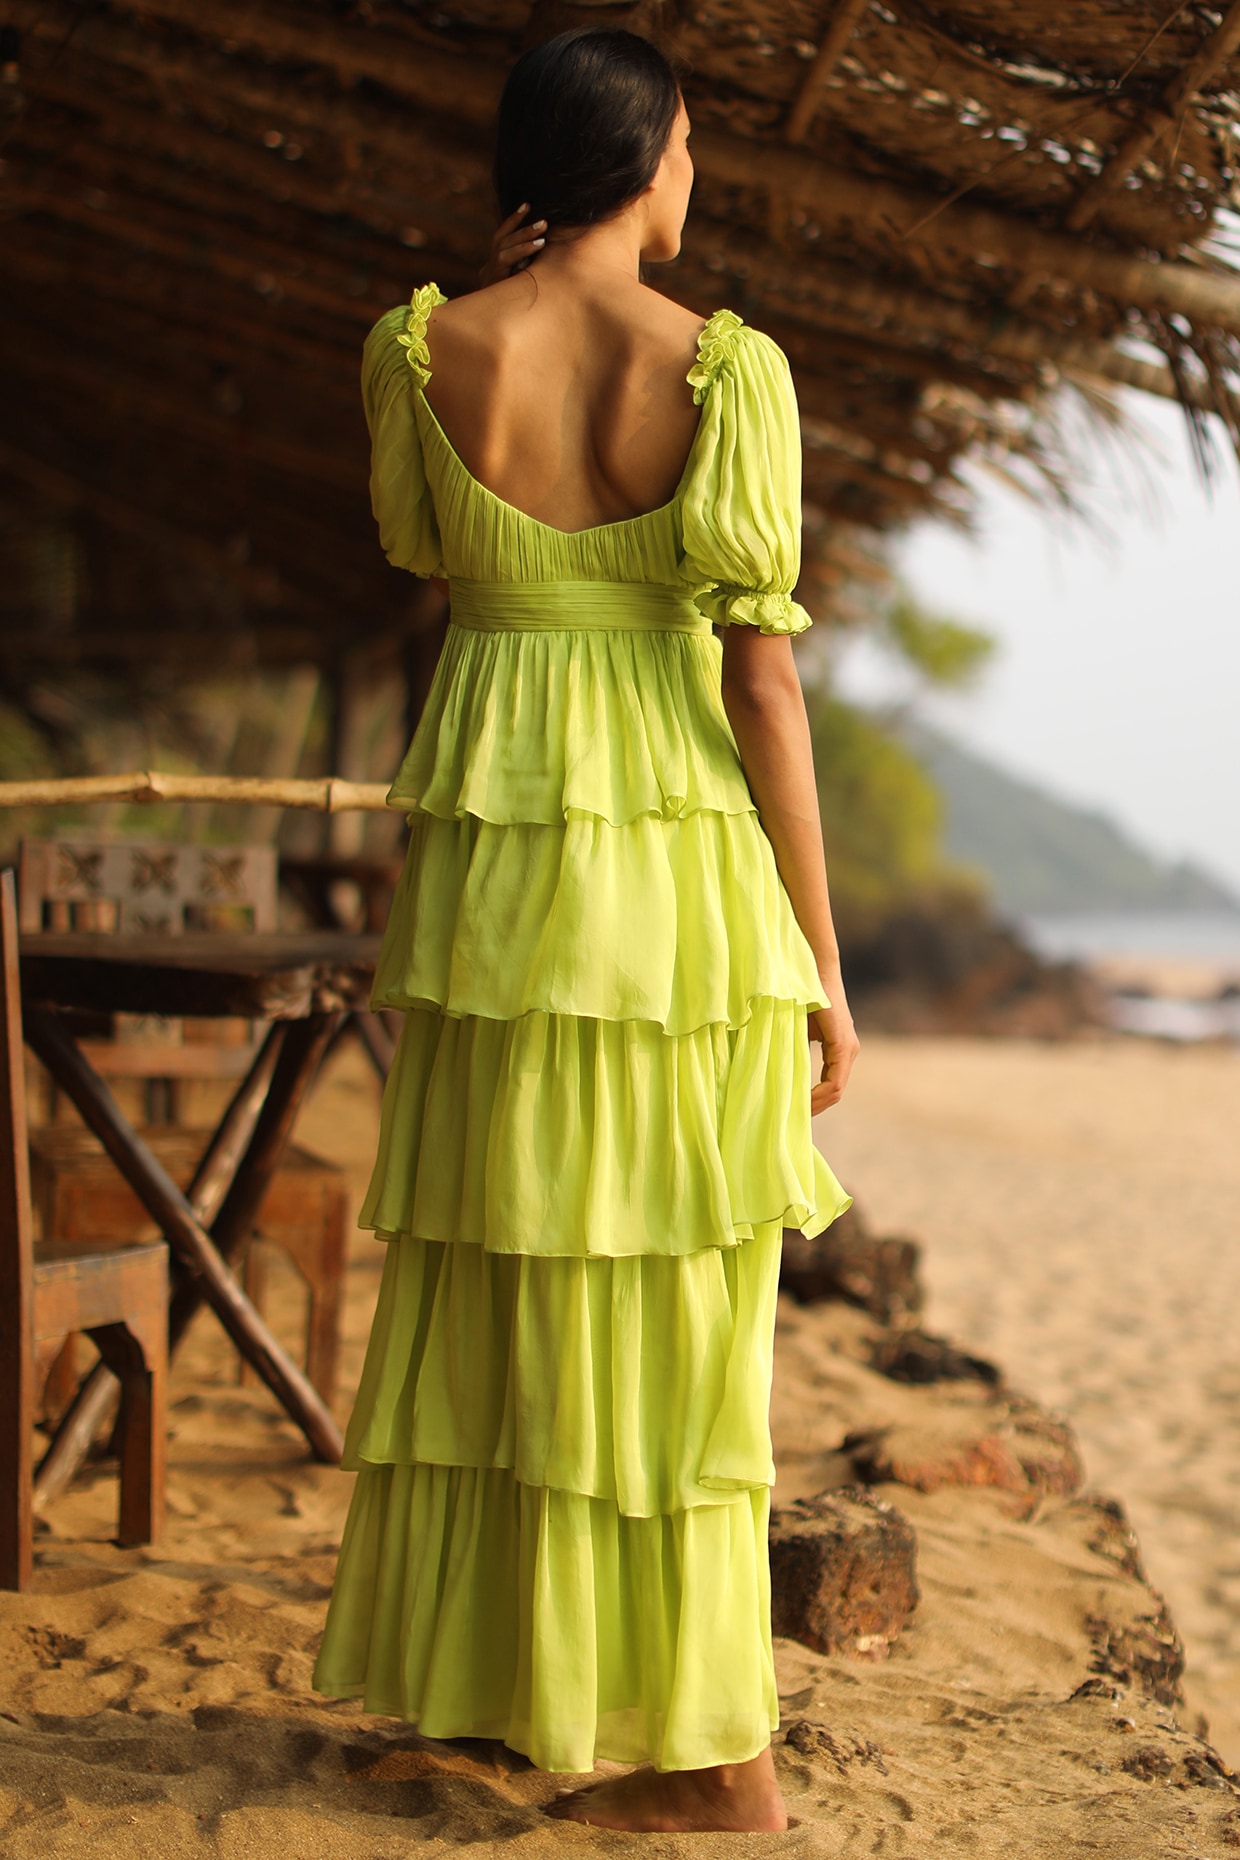 Golden Hour Gown | Liylah | Modest Gown Rental